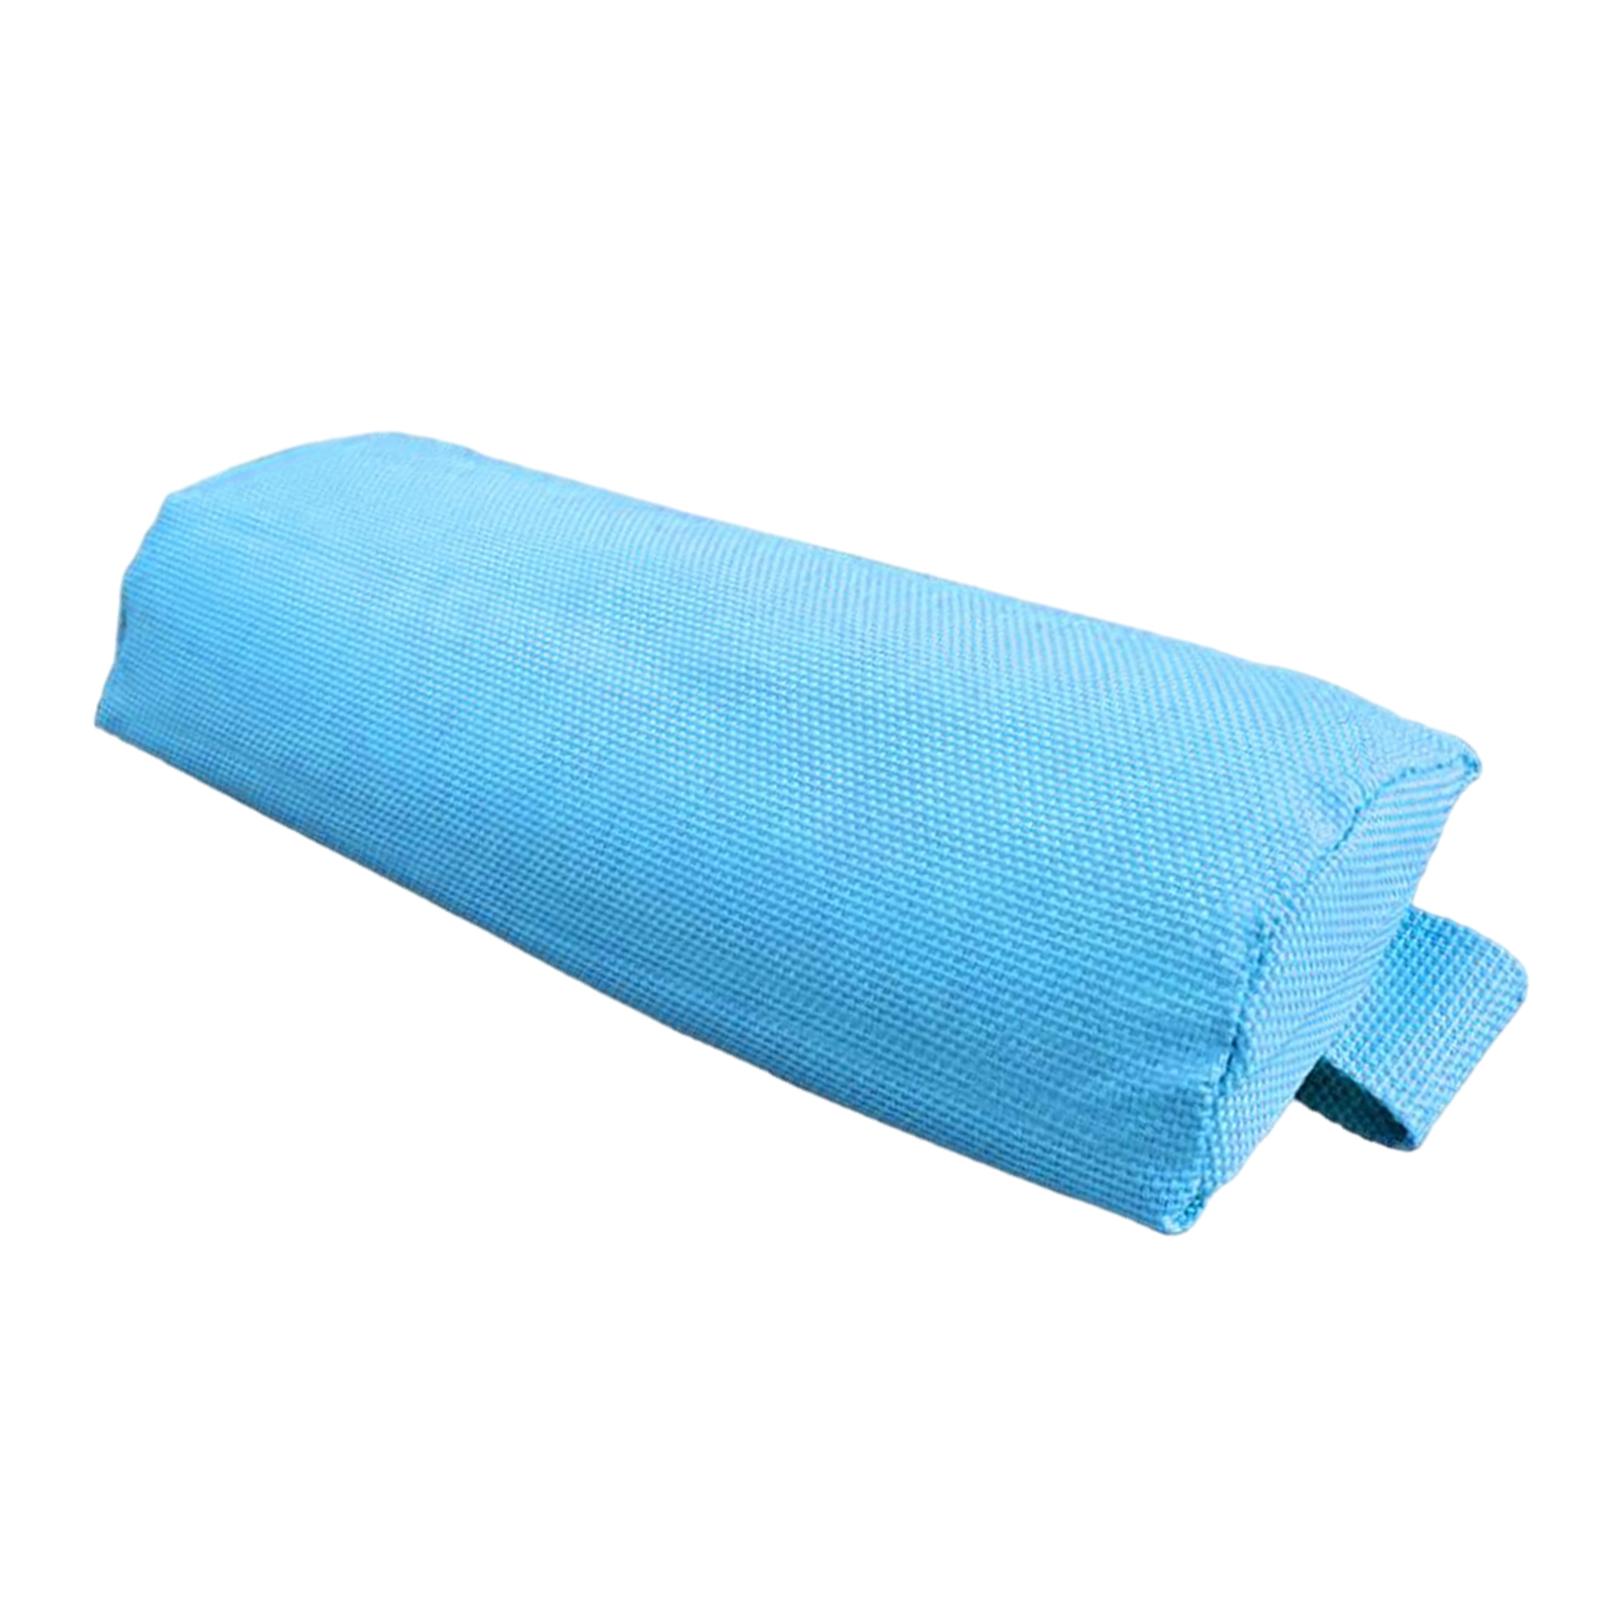 Comfortable Head Cushion Pillow for Folding Chair Beach Patio Chair Headrest blue - image 5 of 6